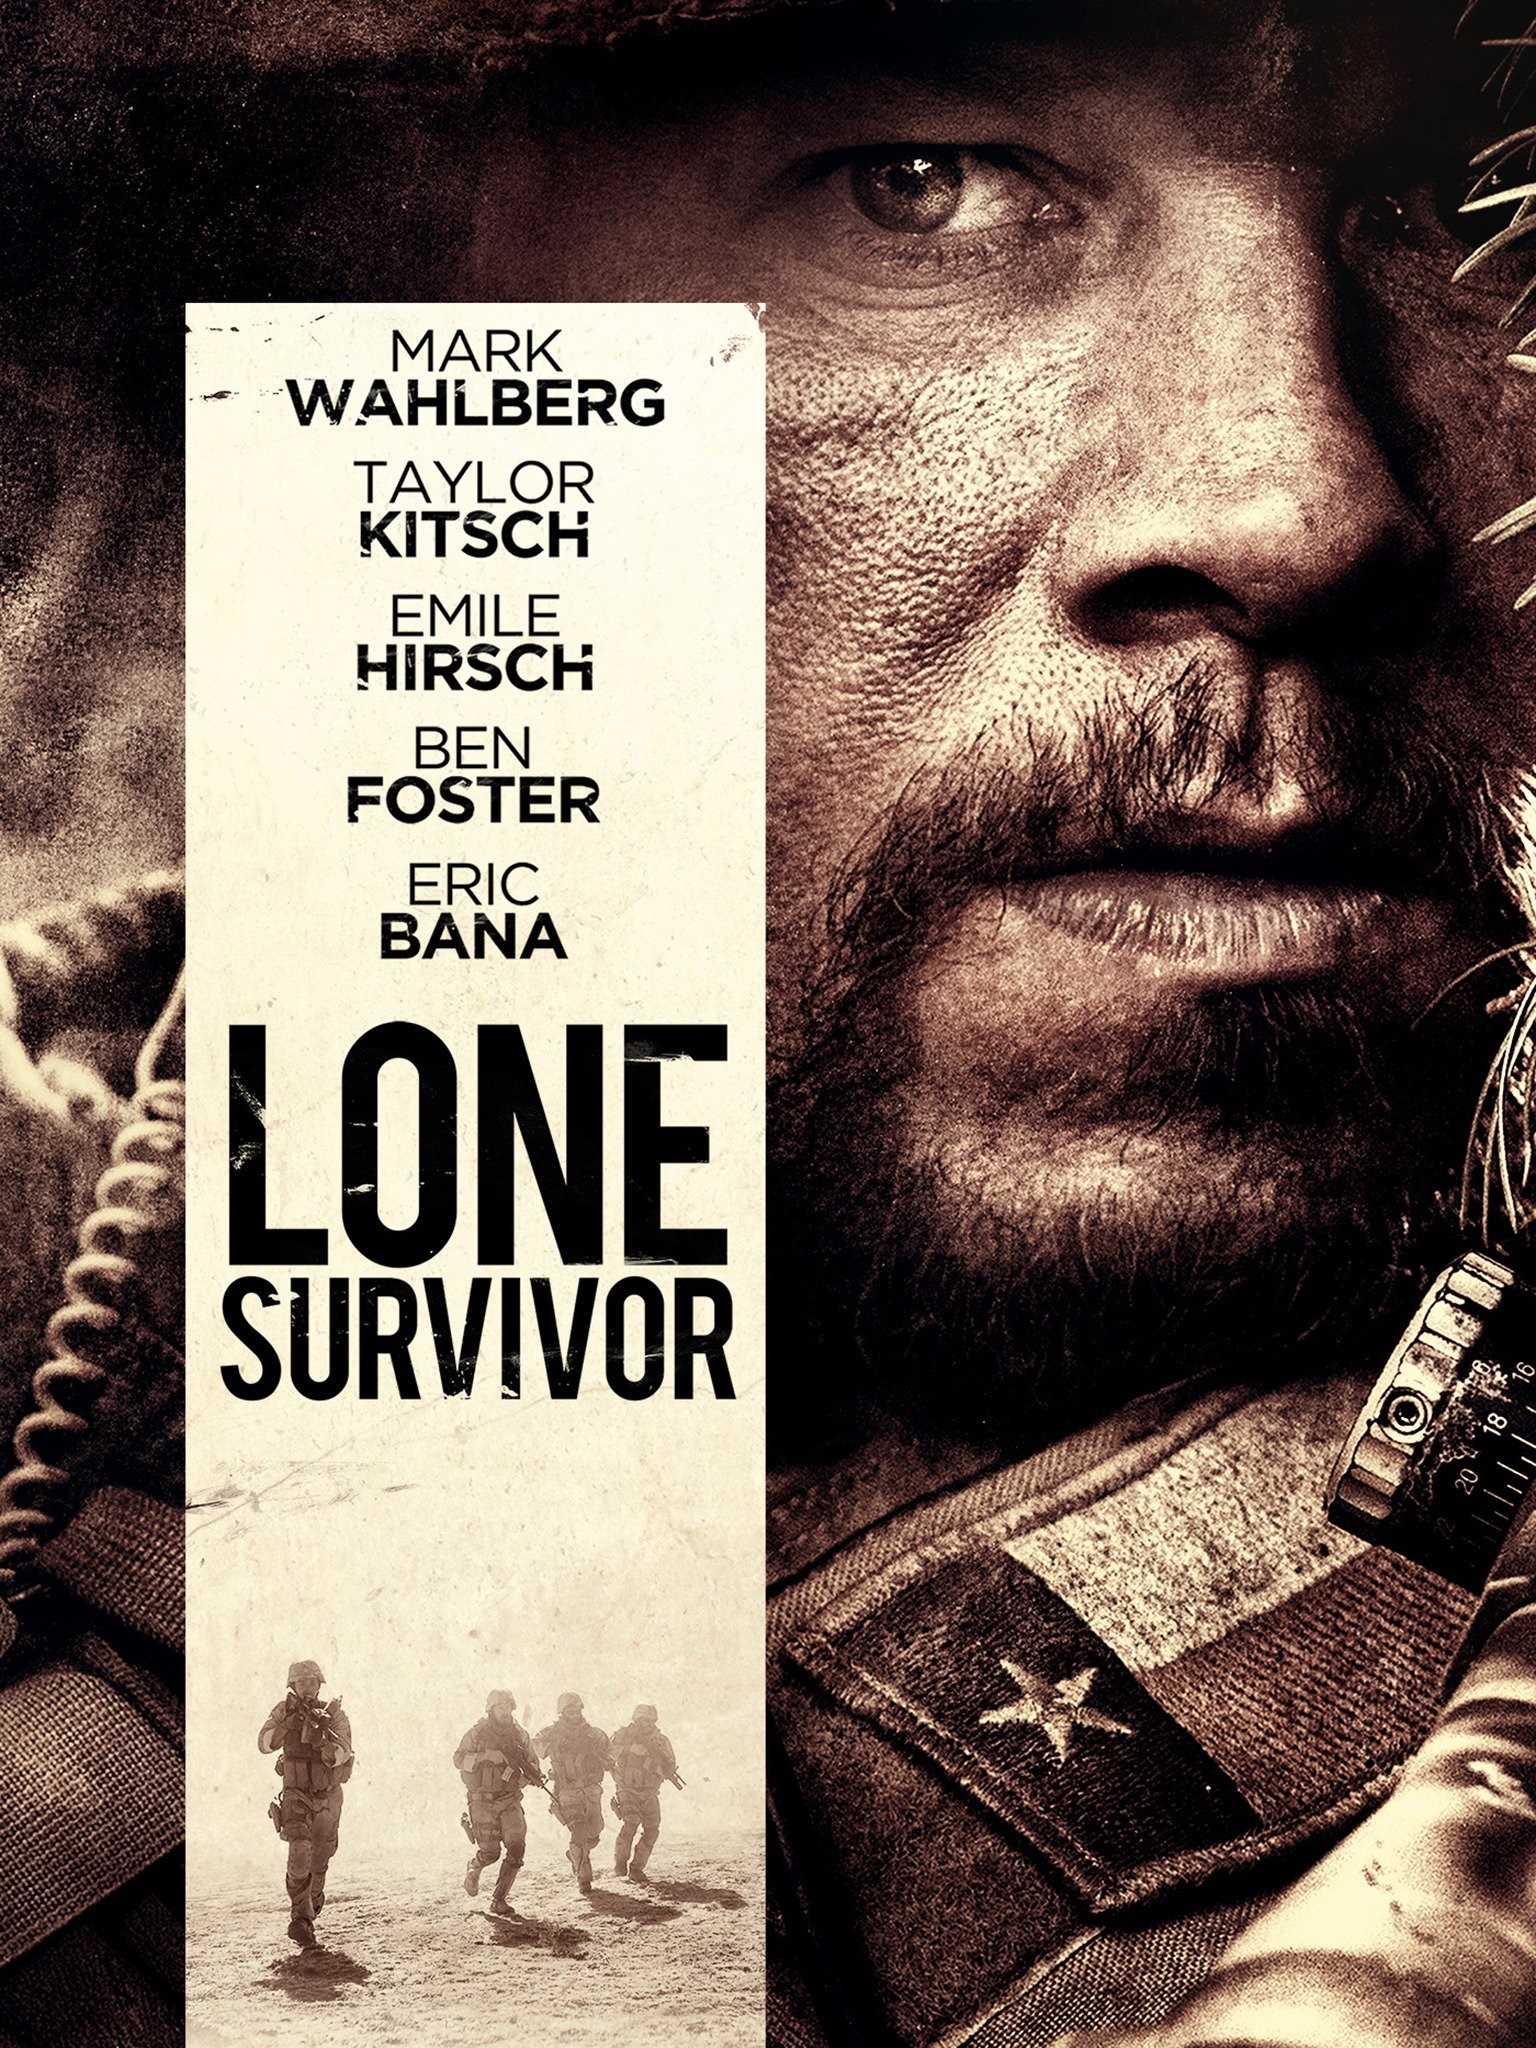 MOVIE REVIEW: 'Lone Survivor' - Washington Times